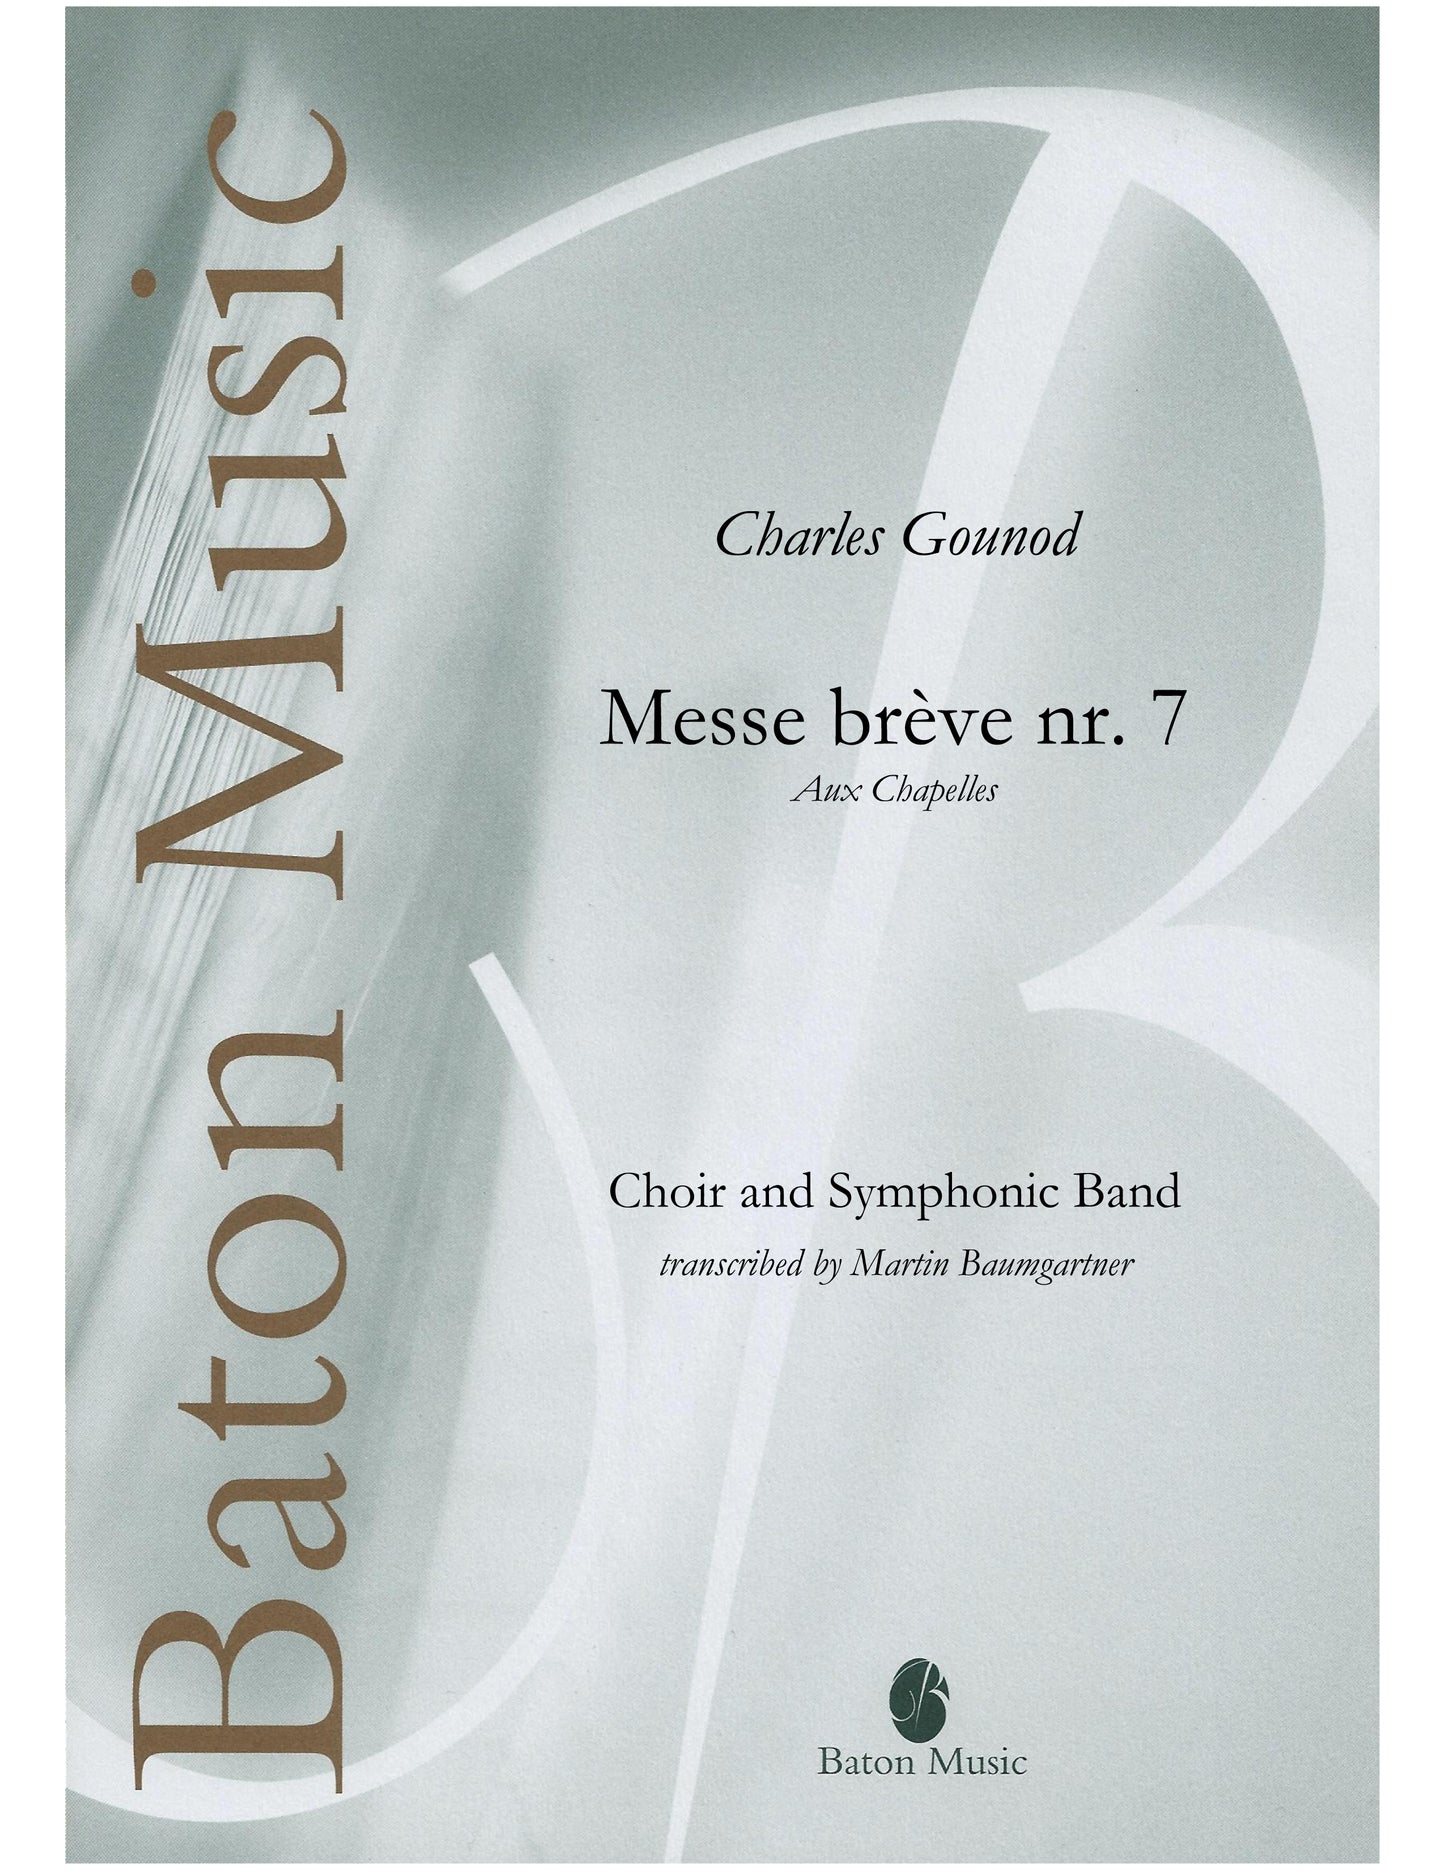 Messe brève nr. 7 in C major - C. Gounod